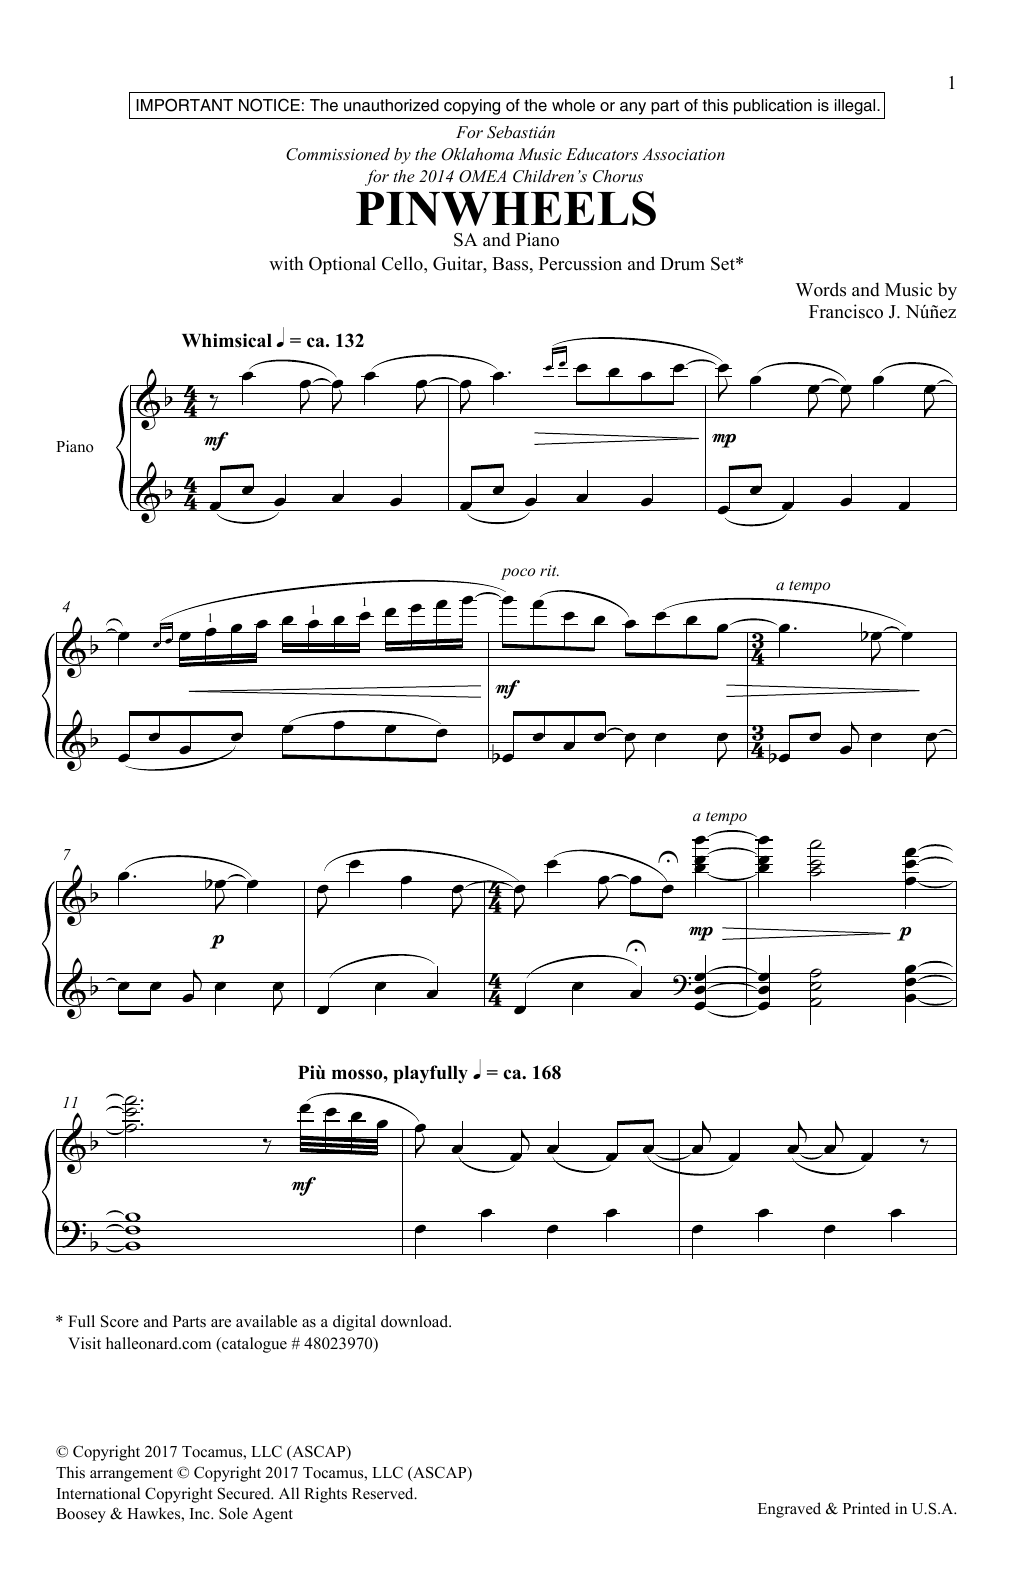 Francisco Nunez Pinwheels sheet music notes and chords arranged for 2-Part Choir